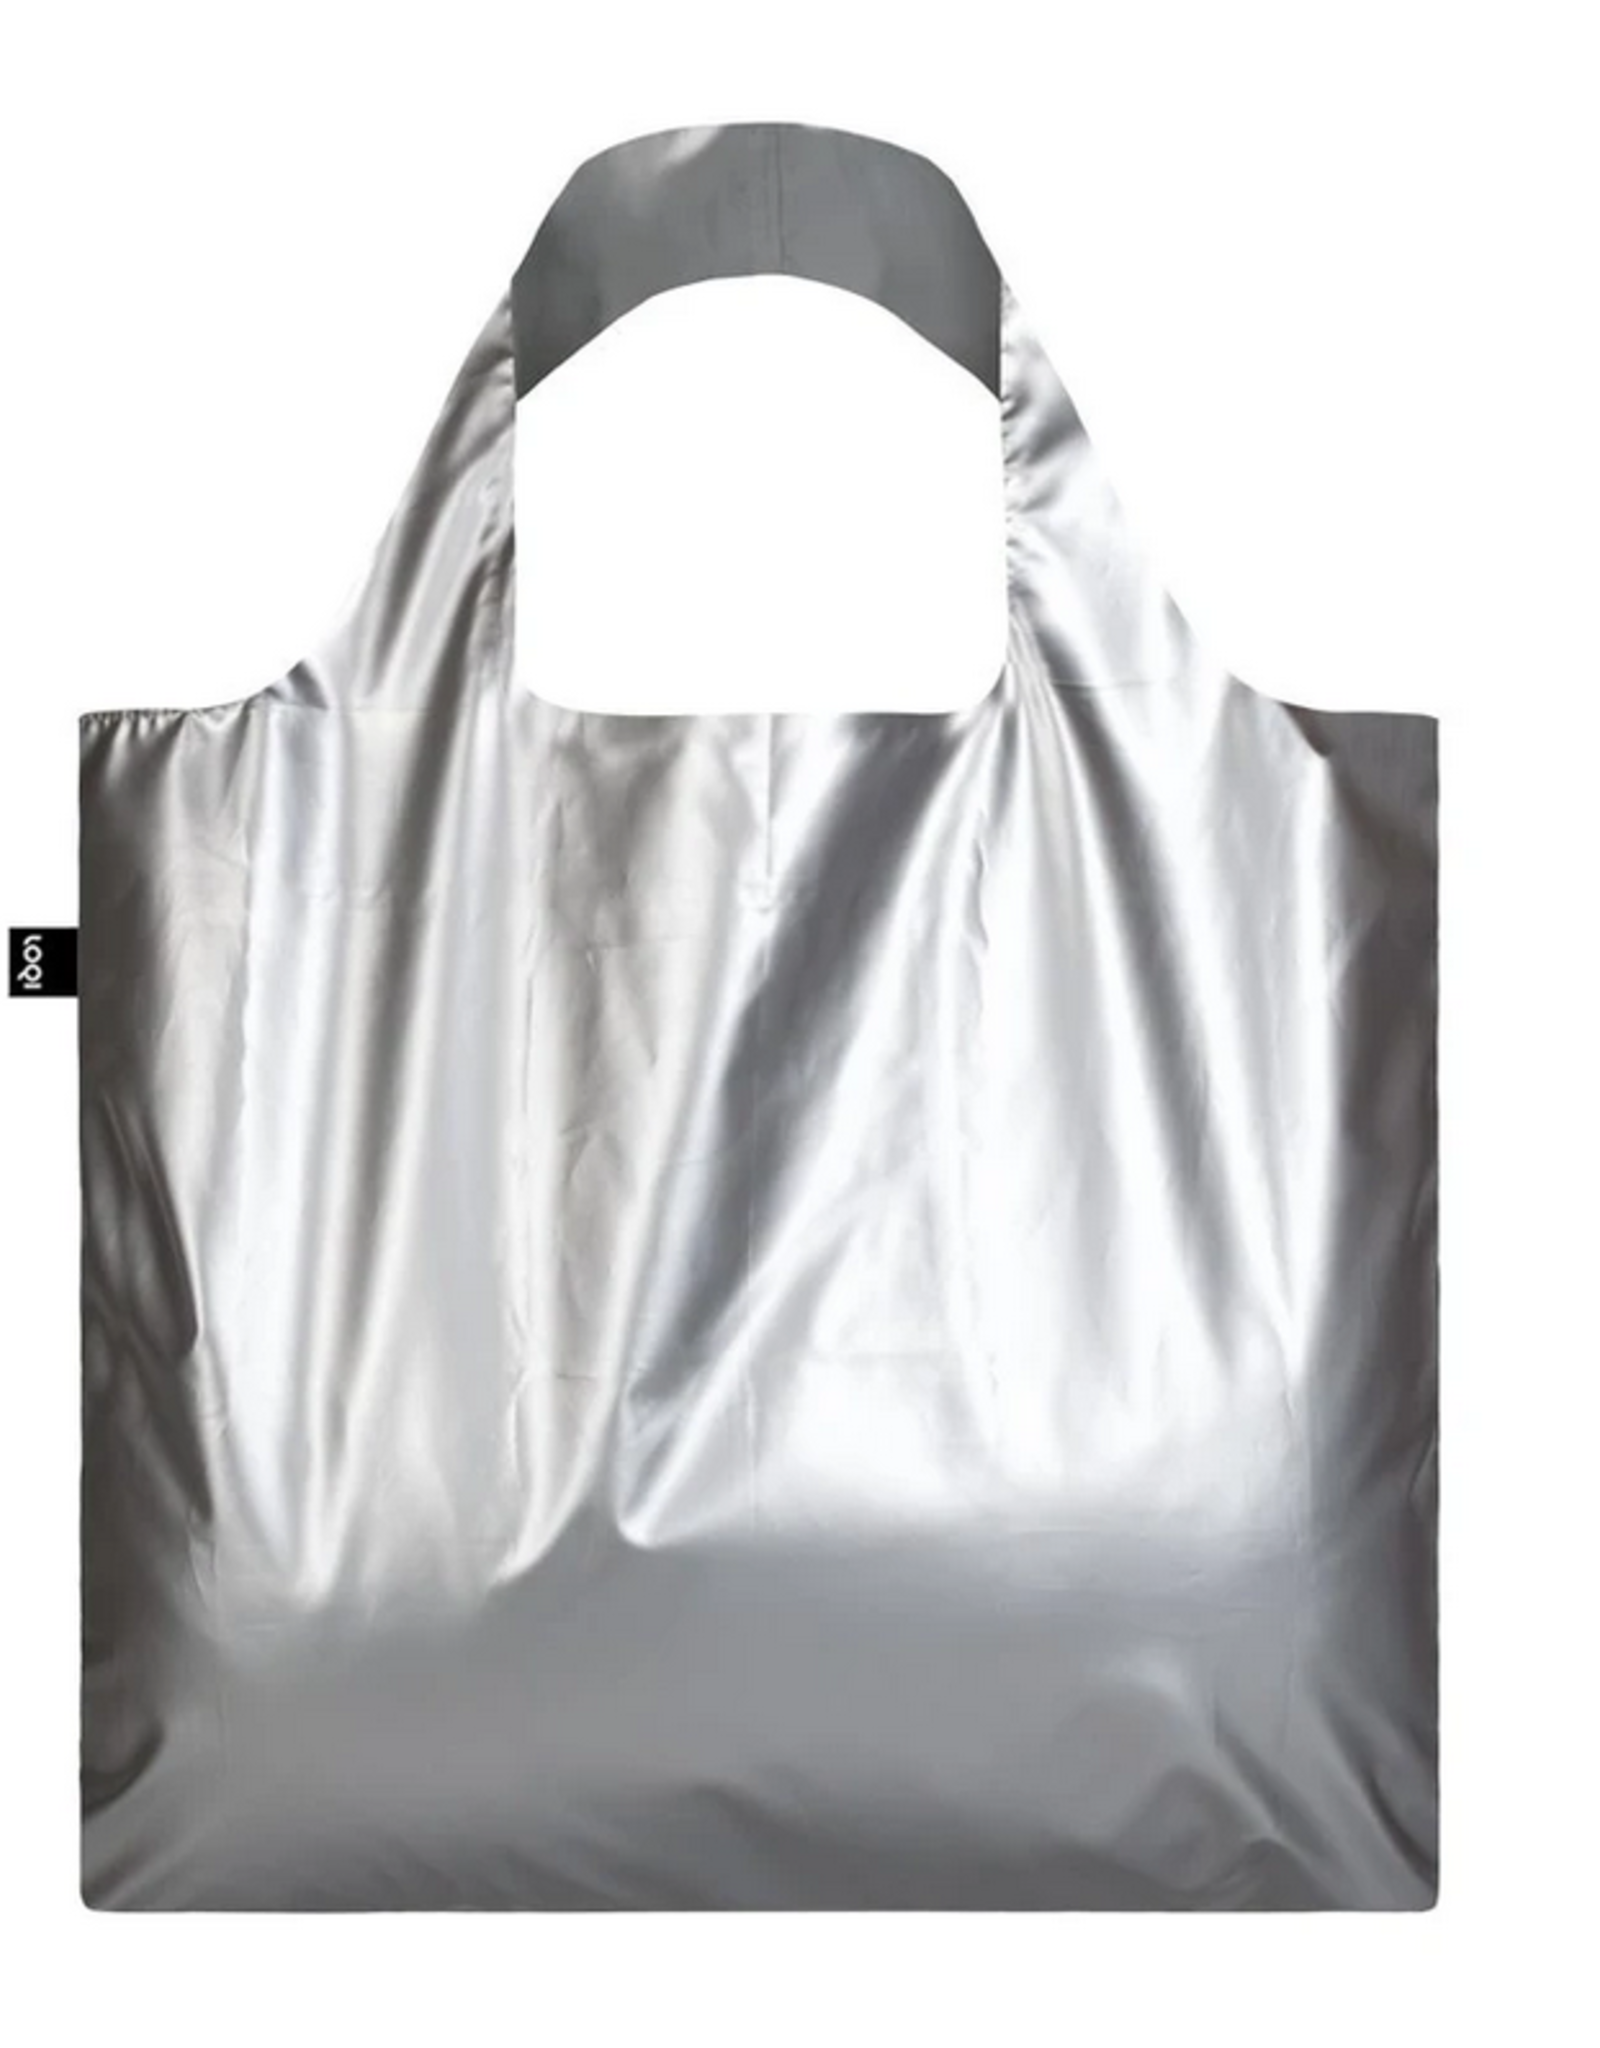 Bag Metallic Silver